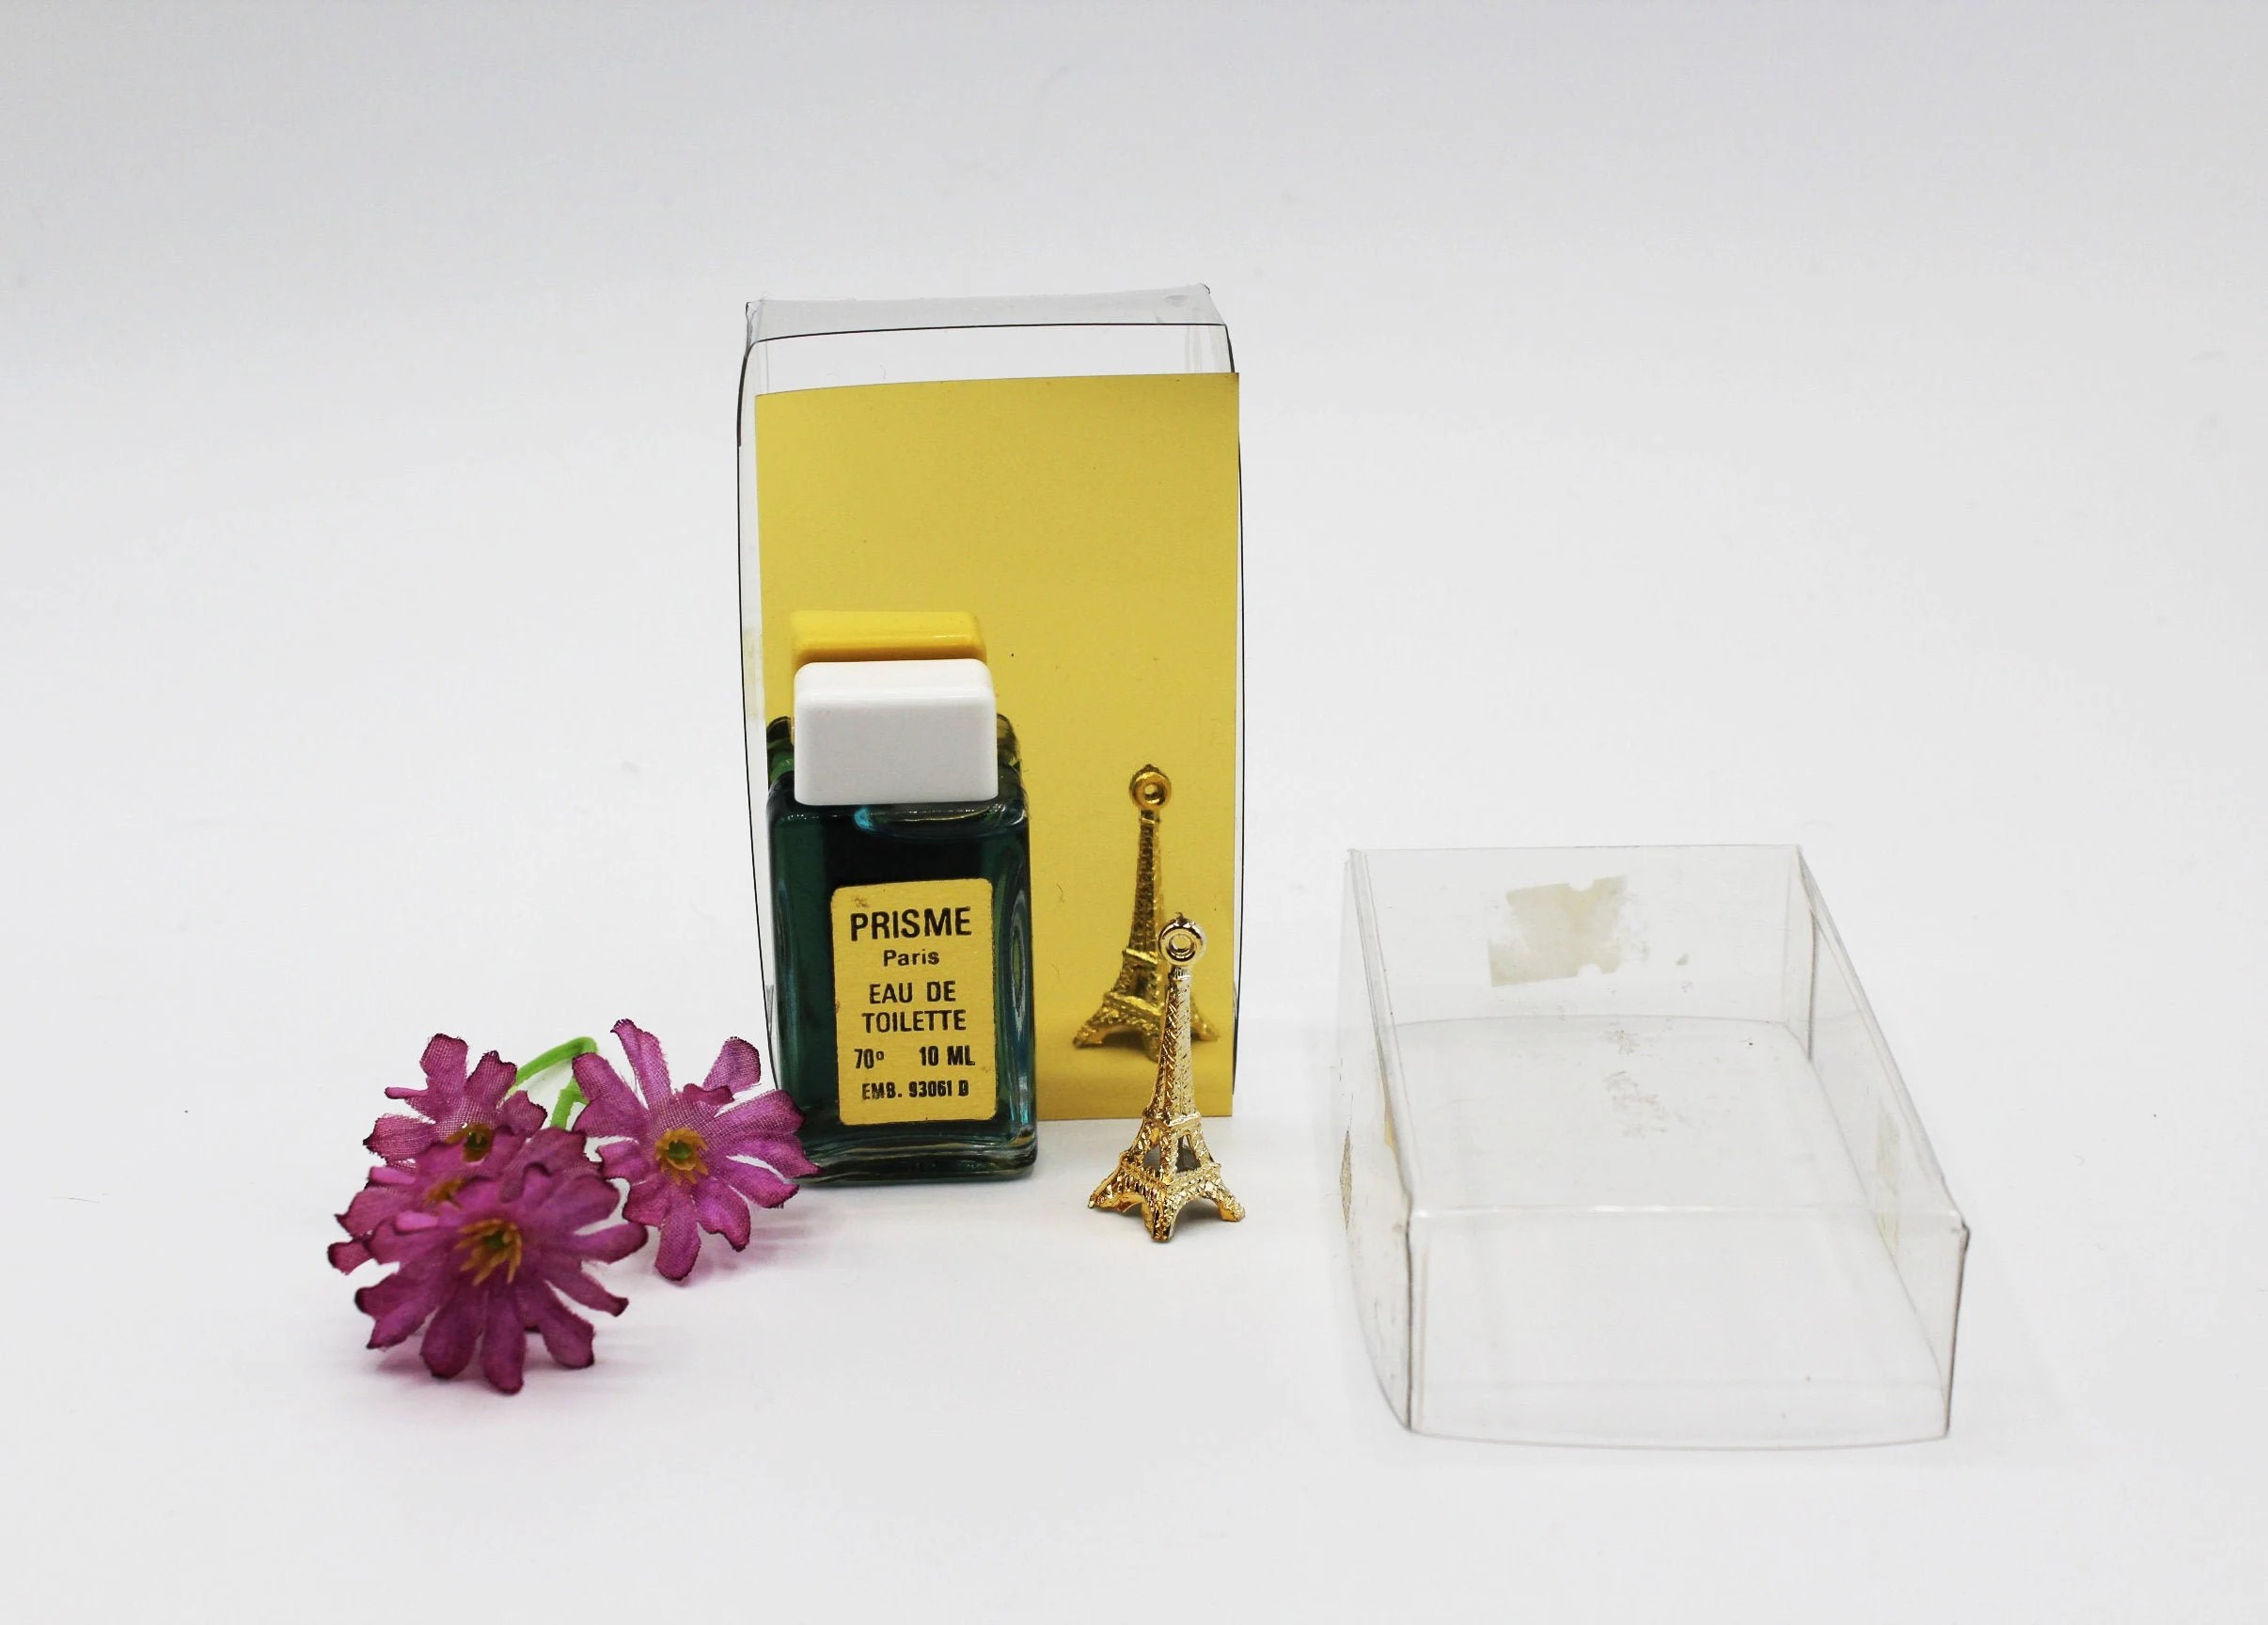 Vintage French Perfume – Prisme Paris Mini Gift Set – Eau de Toilette – 10 ML at Whispering City RVA